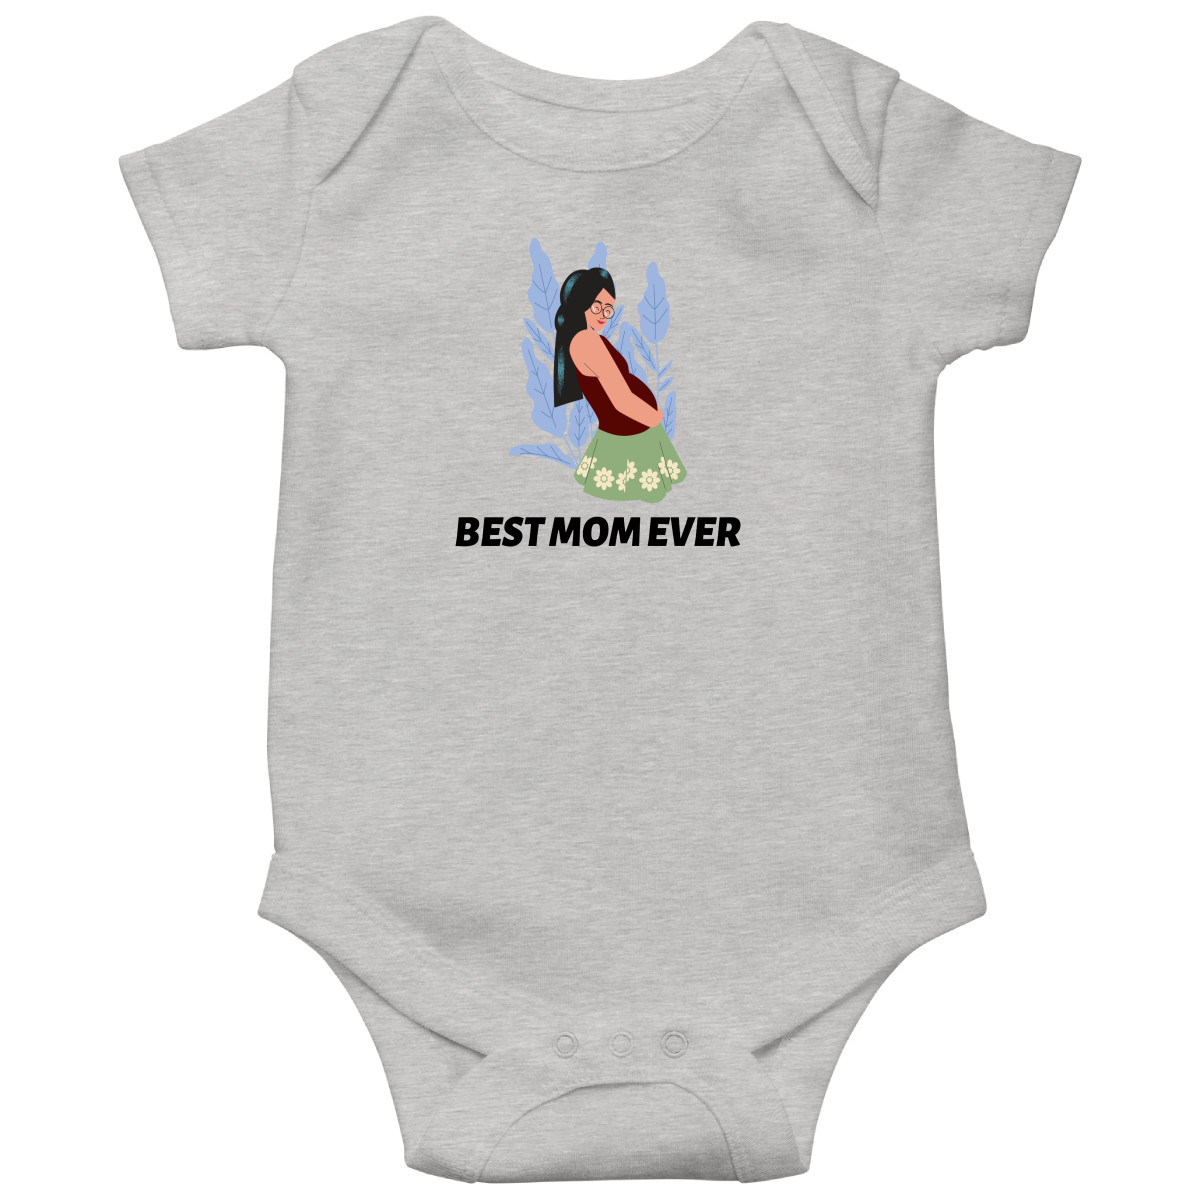 Best Mom Ever Baby Bodysuits | Gray